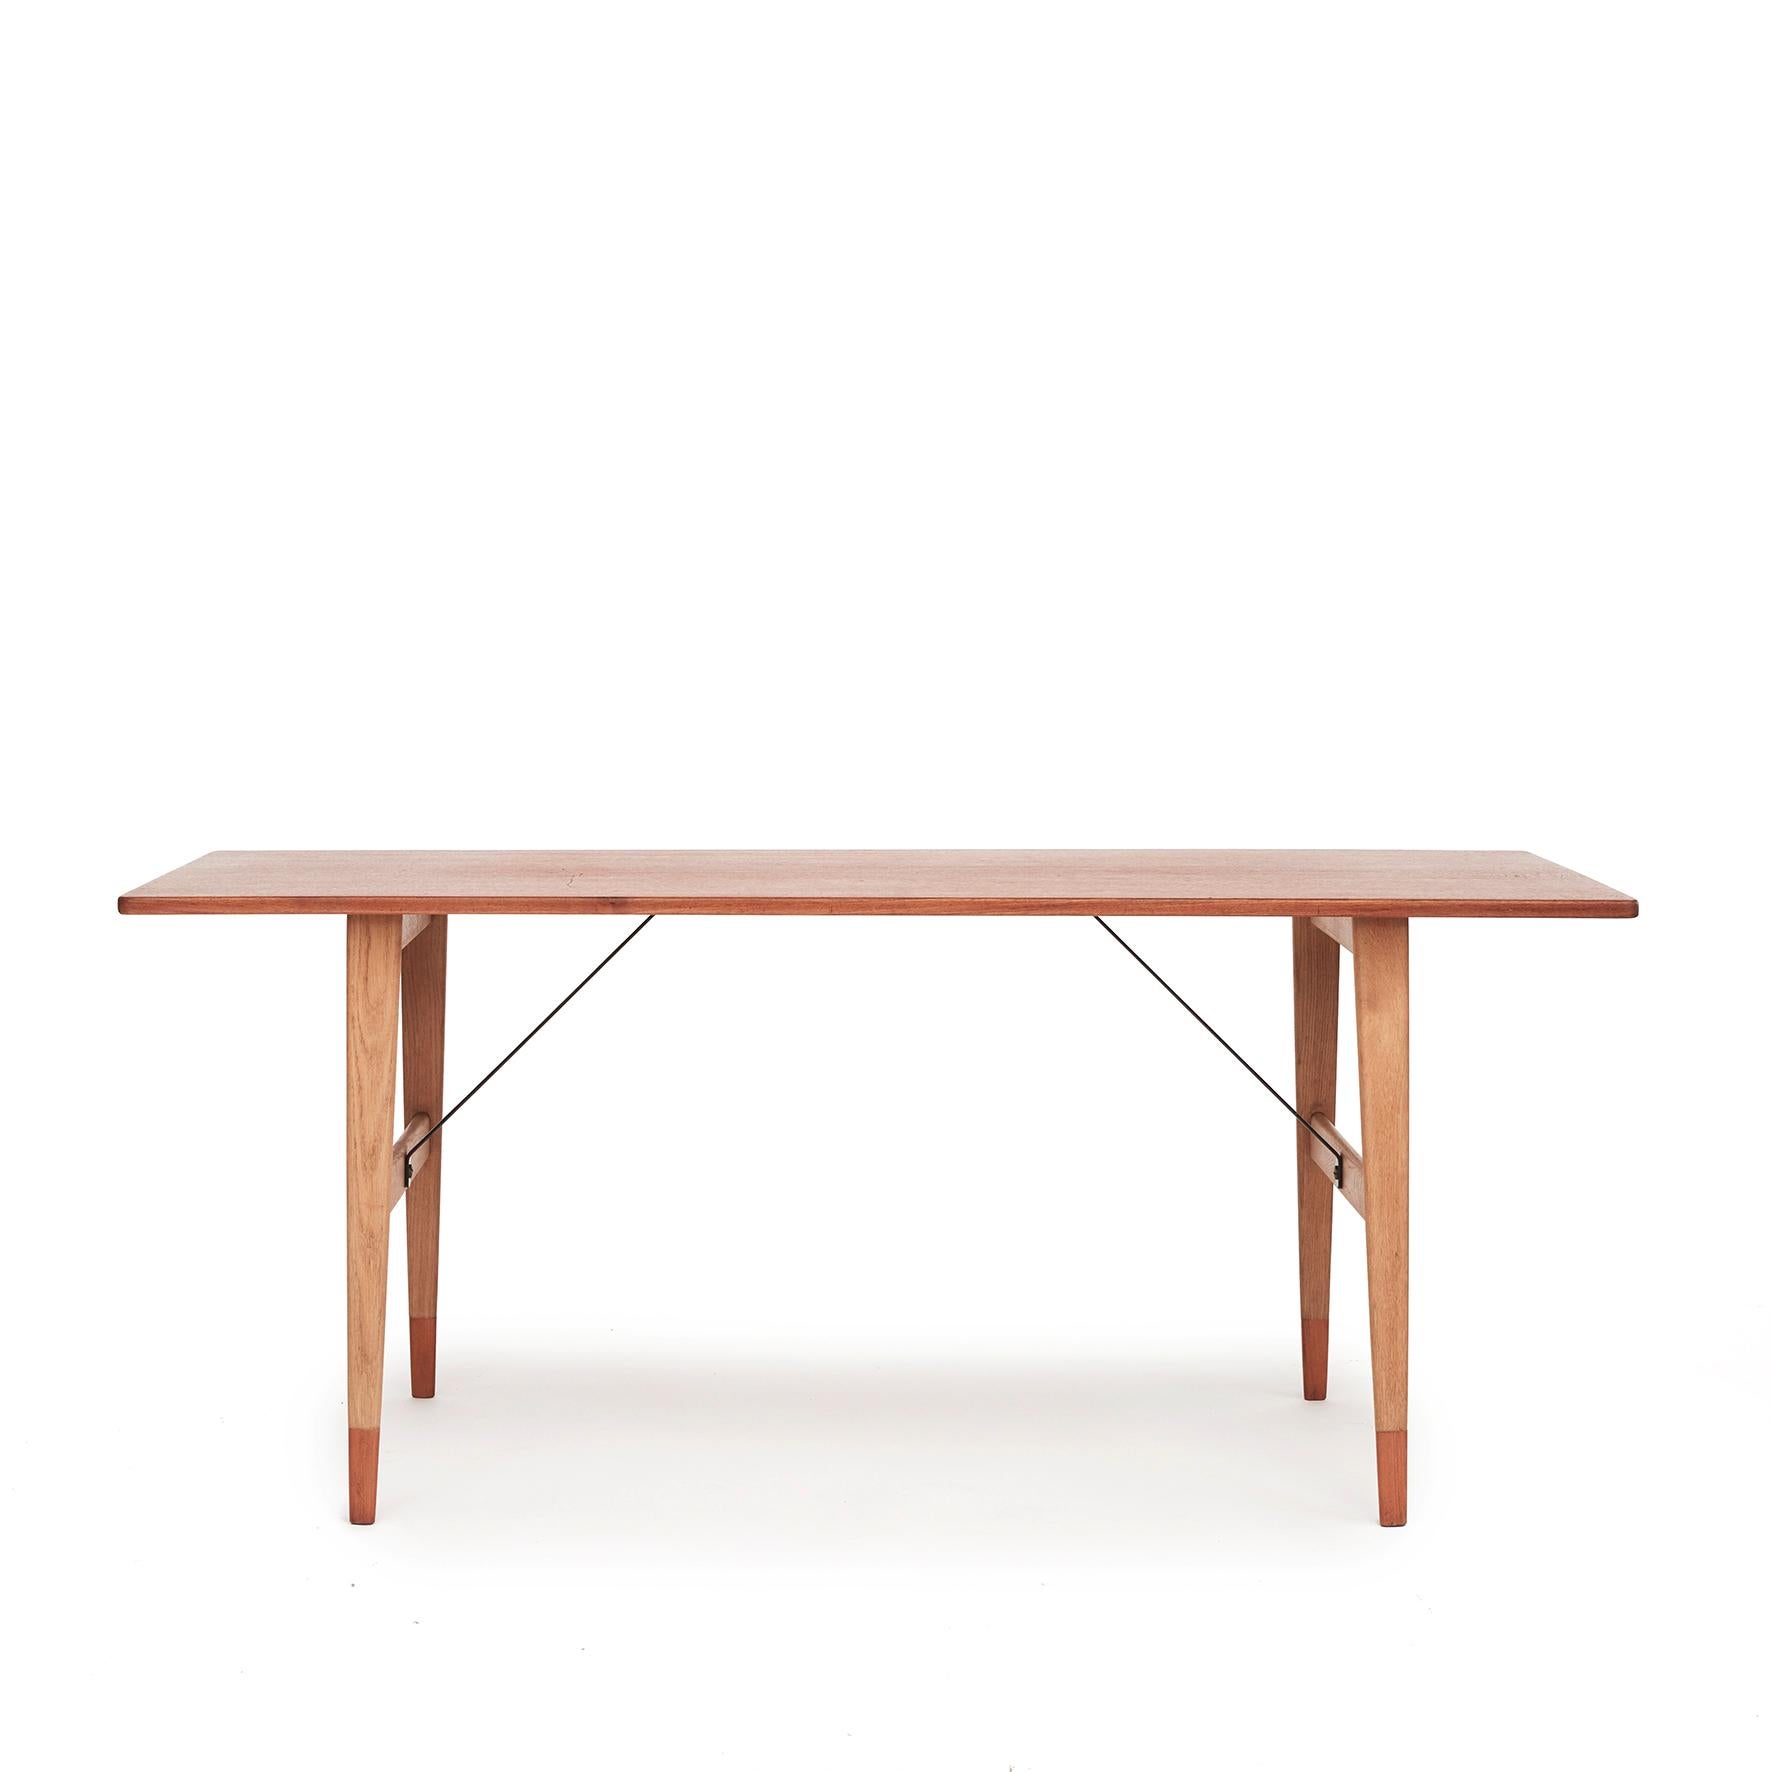 Børge Mogensen, Danish 1914-1972
Dining table model 281 designed by Børge Mogensen for 